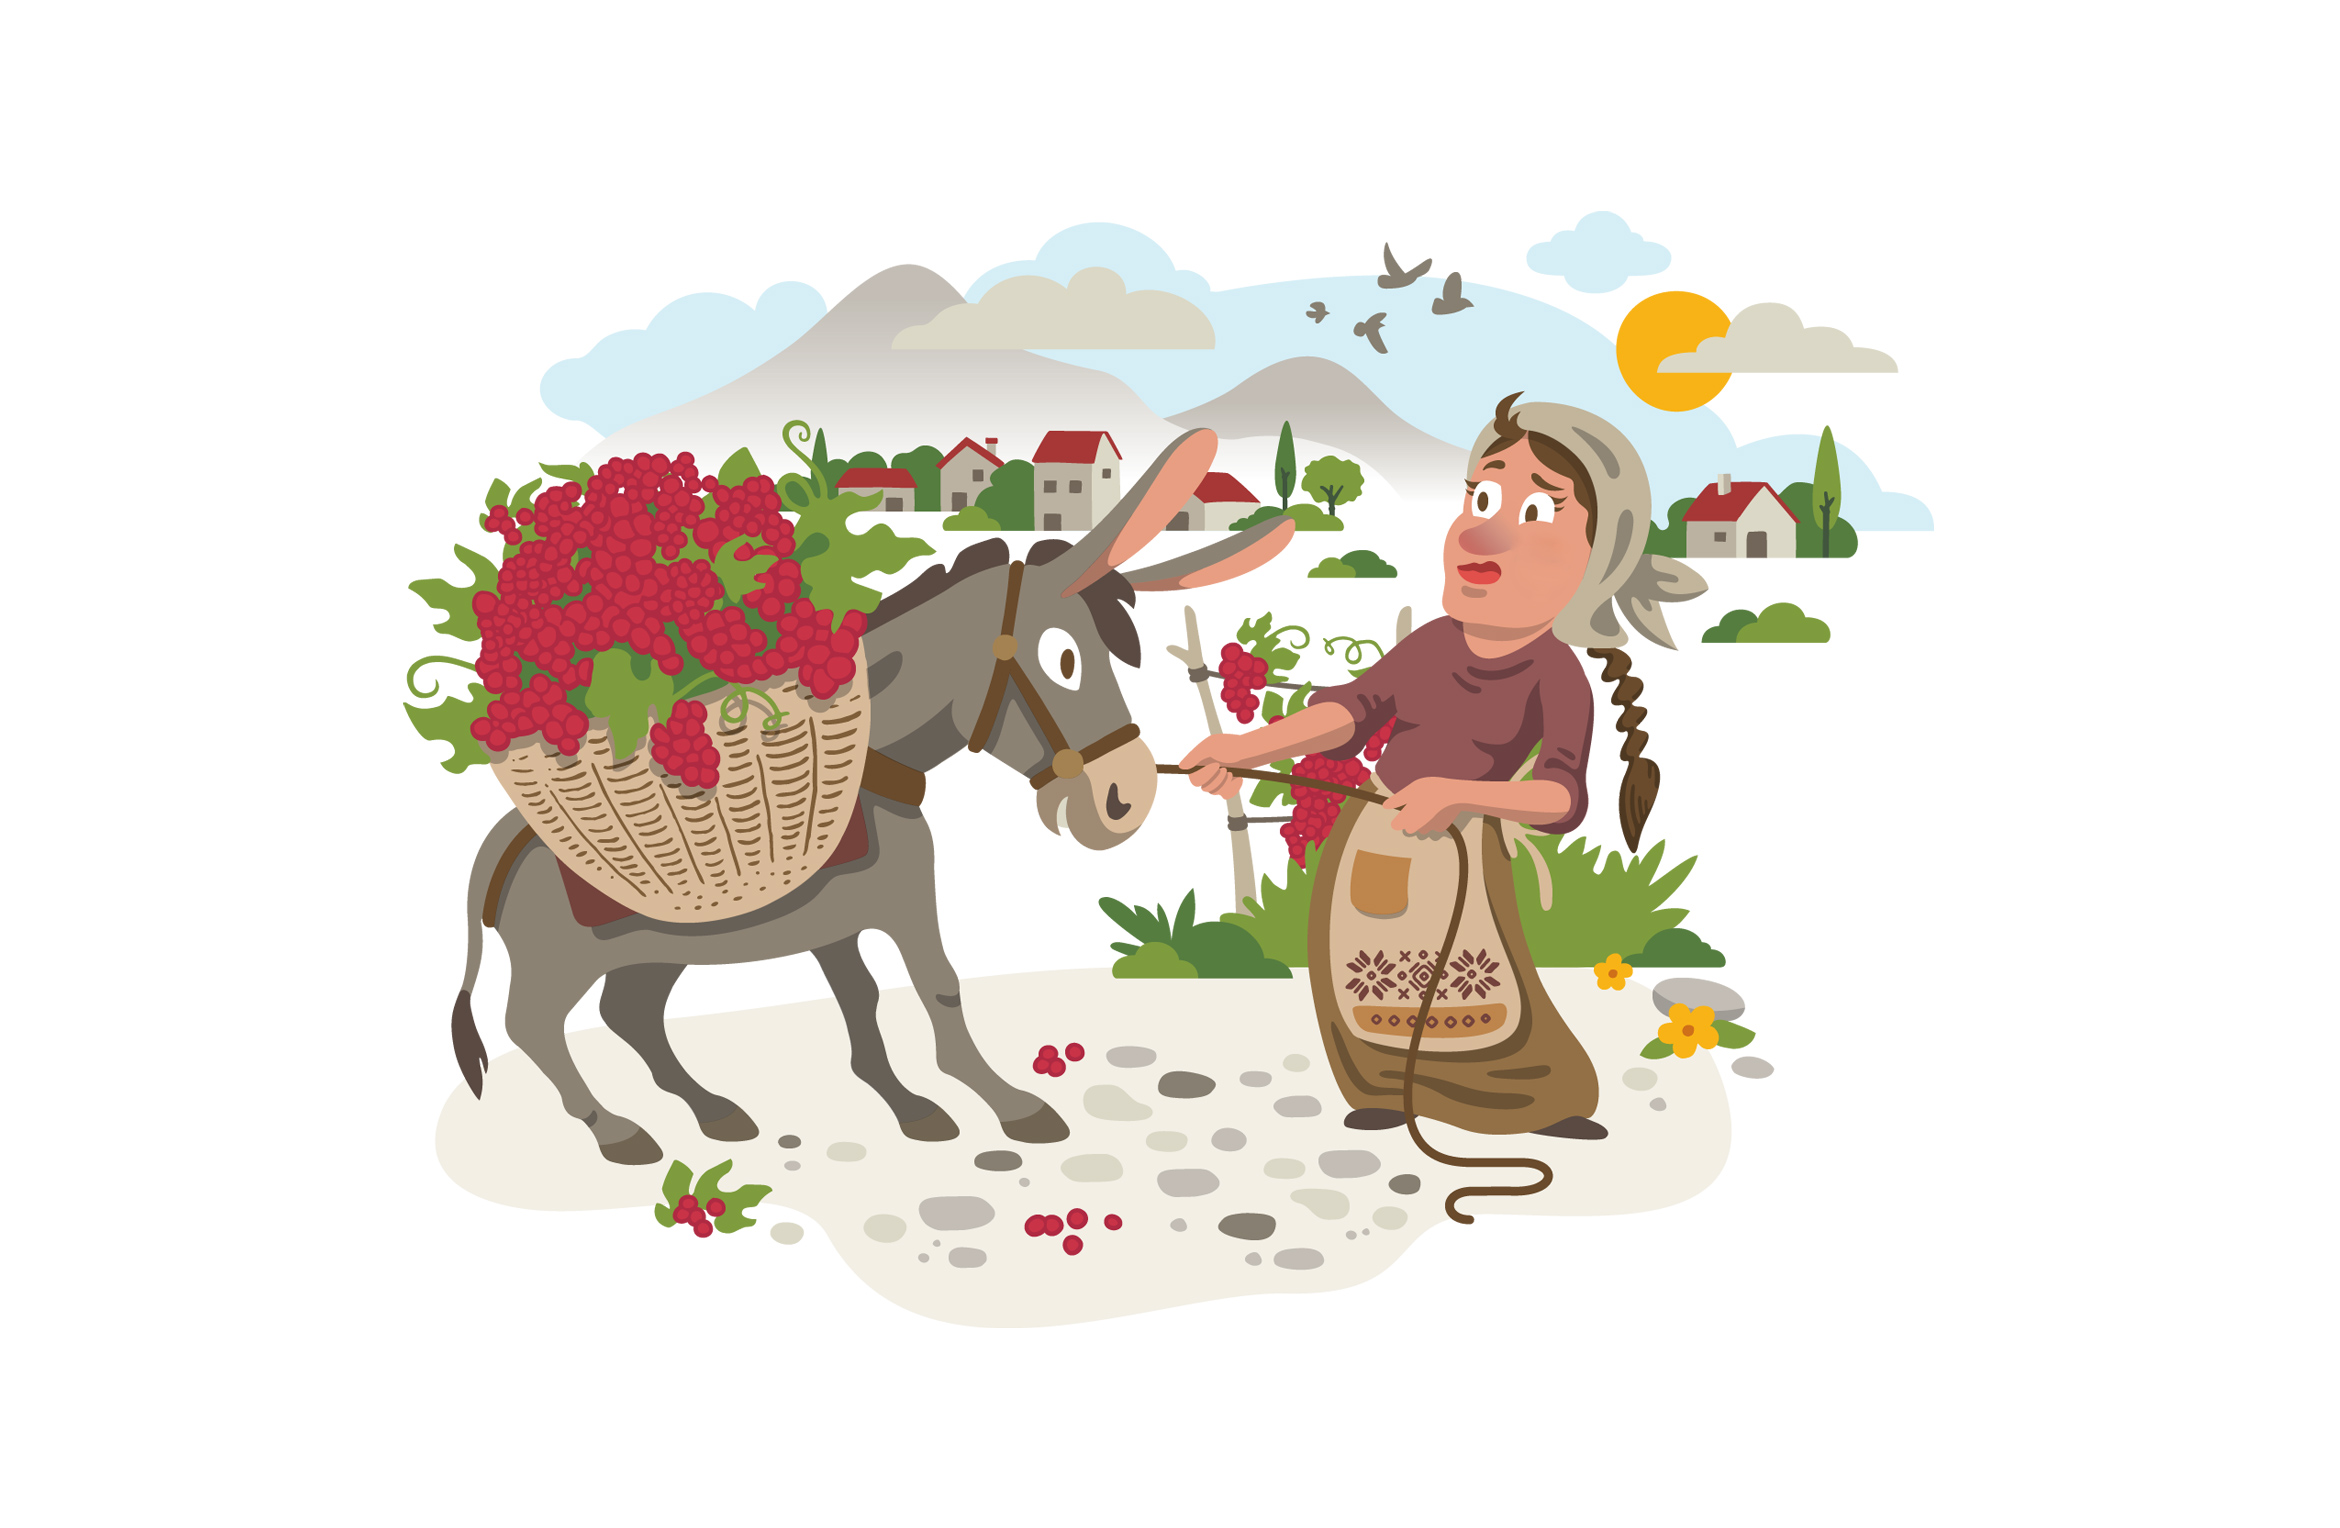 The Cretans donkey illustration